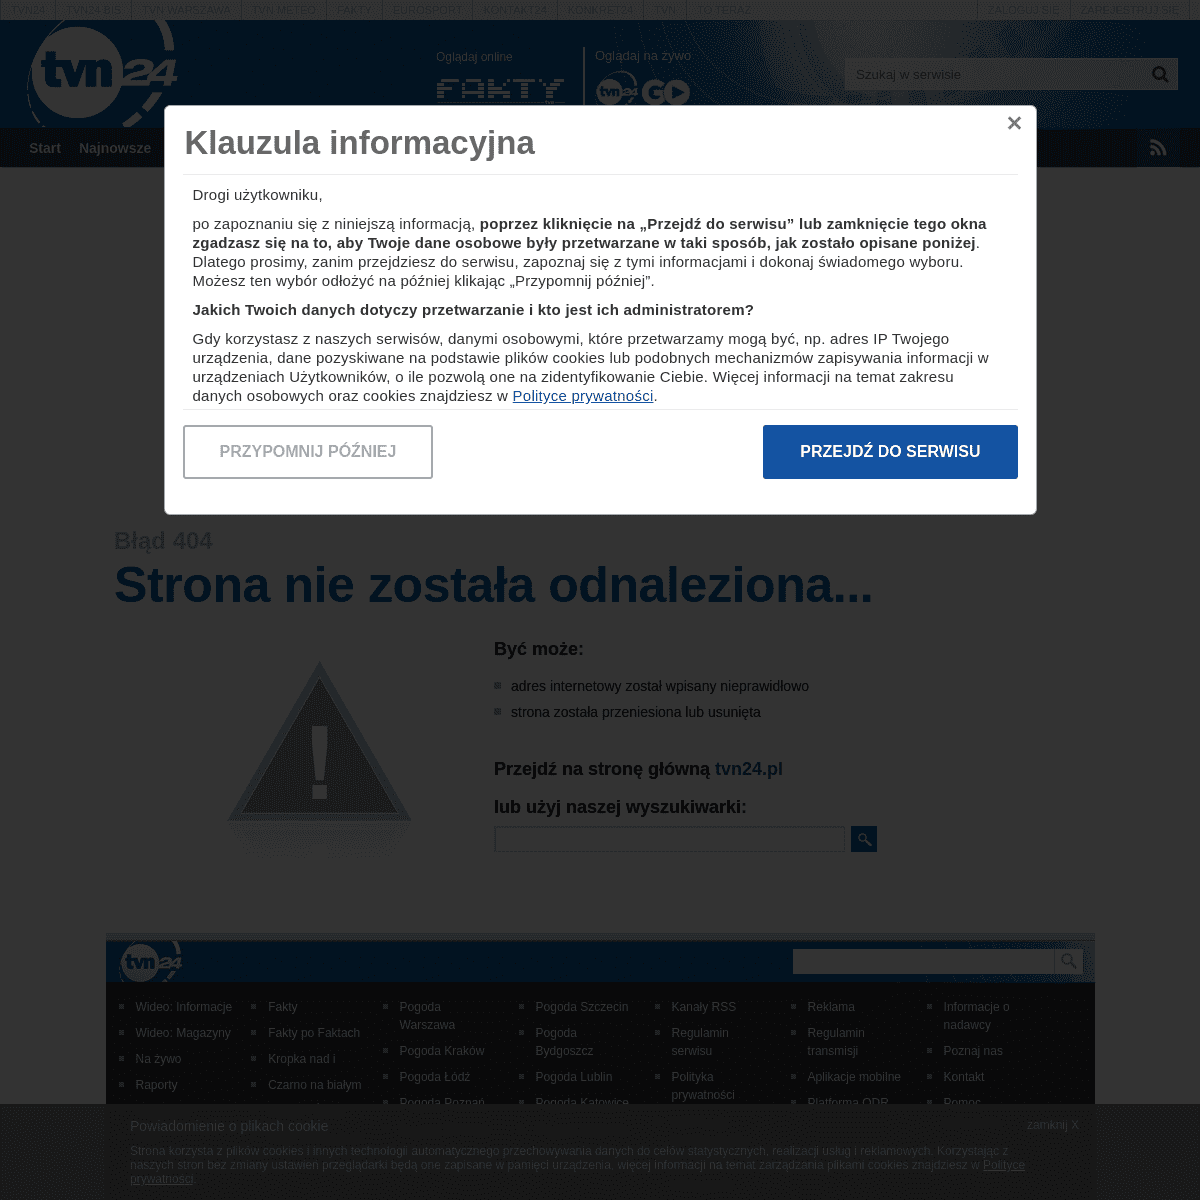 A complete backup of eurosport.tvn24.pl/najnowsze